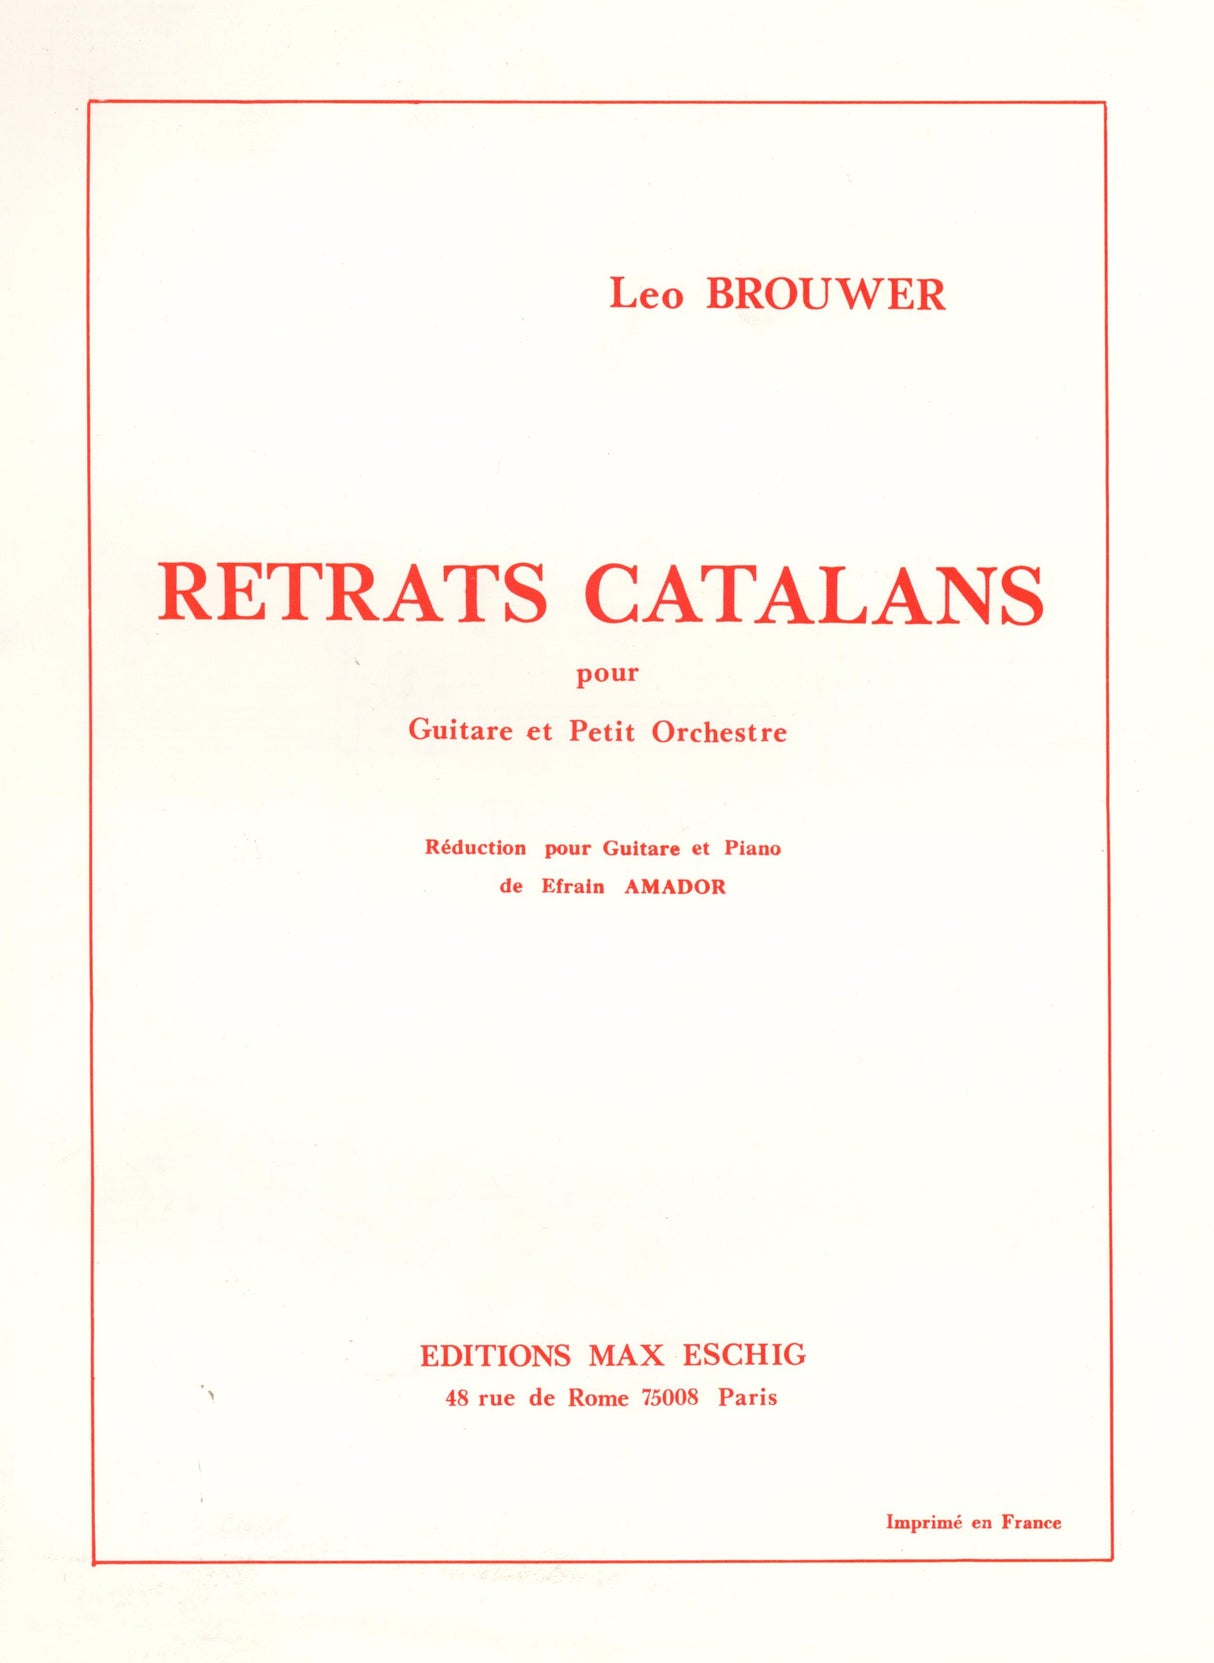 Brouwer: Retrats Catalans